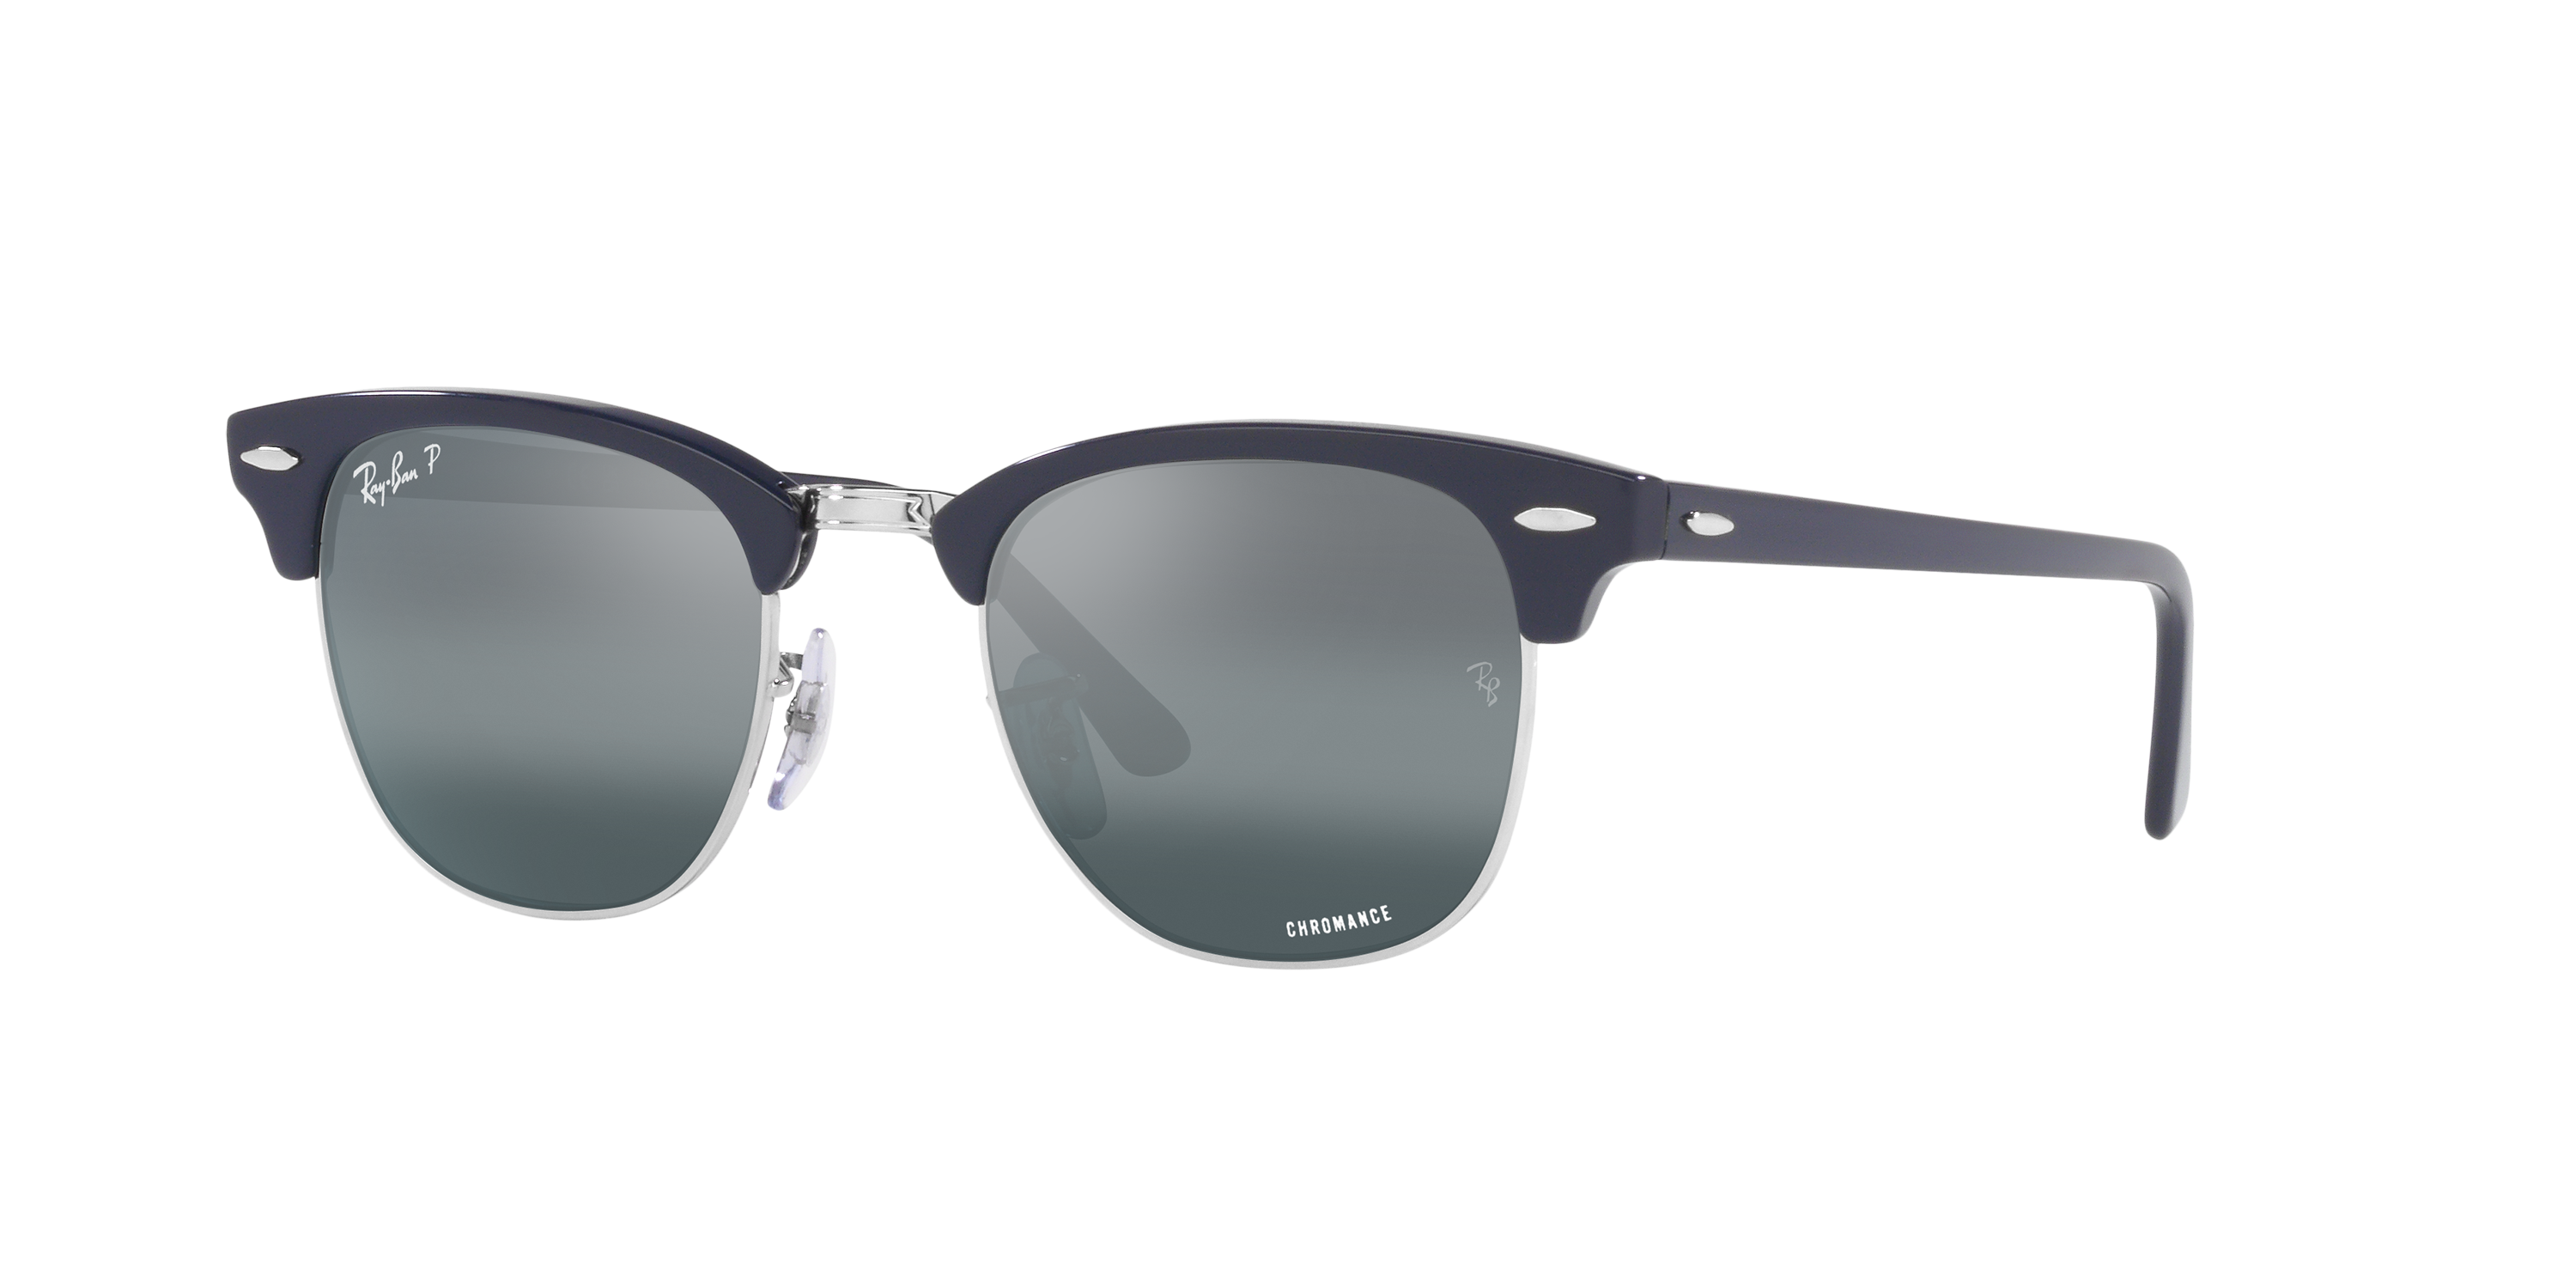 Matron Ten einde raad Moment Ray-Ban Clubmaster Classic RB3016 Chromance Glass Polarized Sunglasses |  Bass Pro Shops